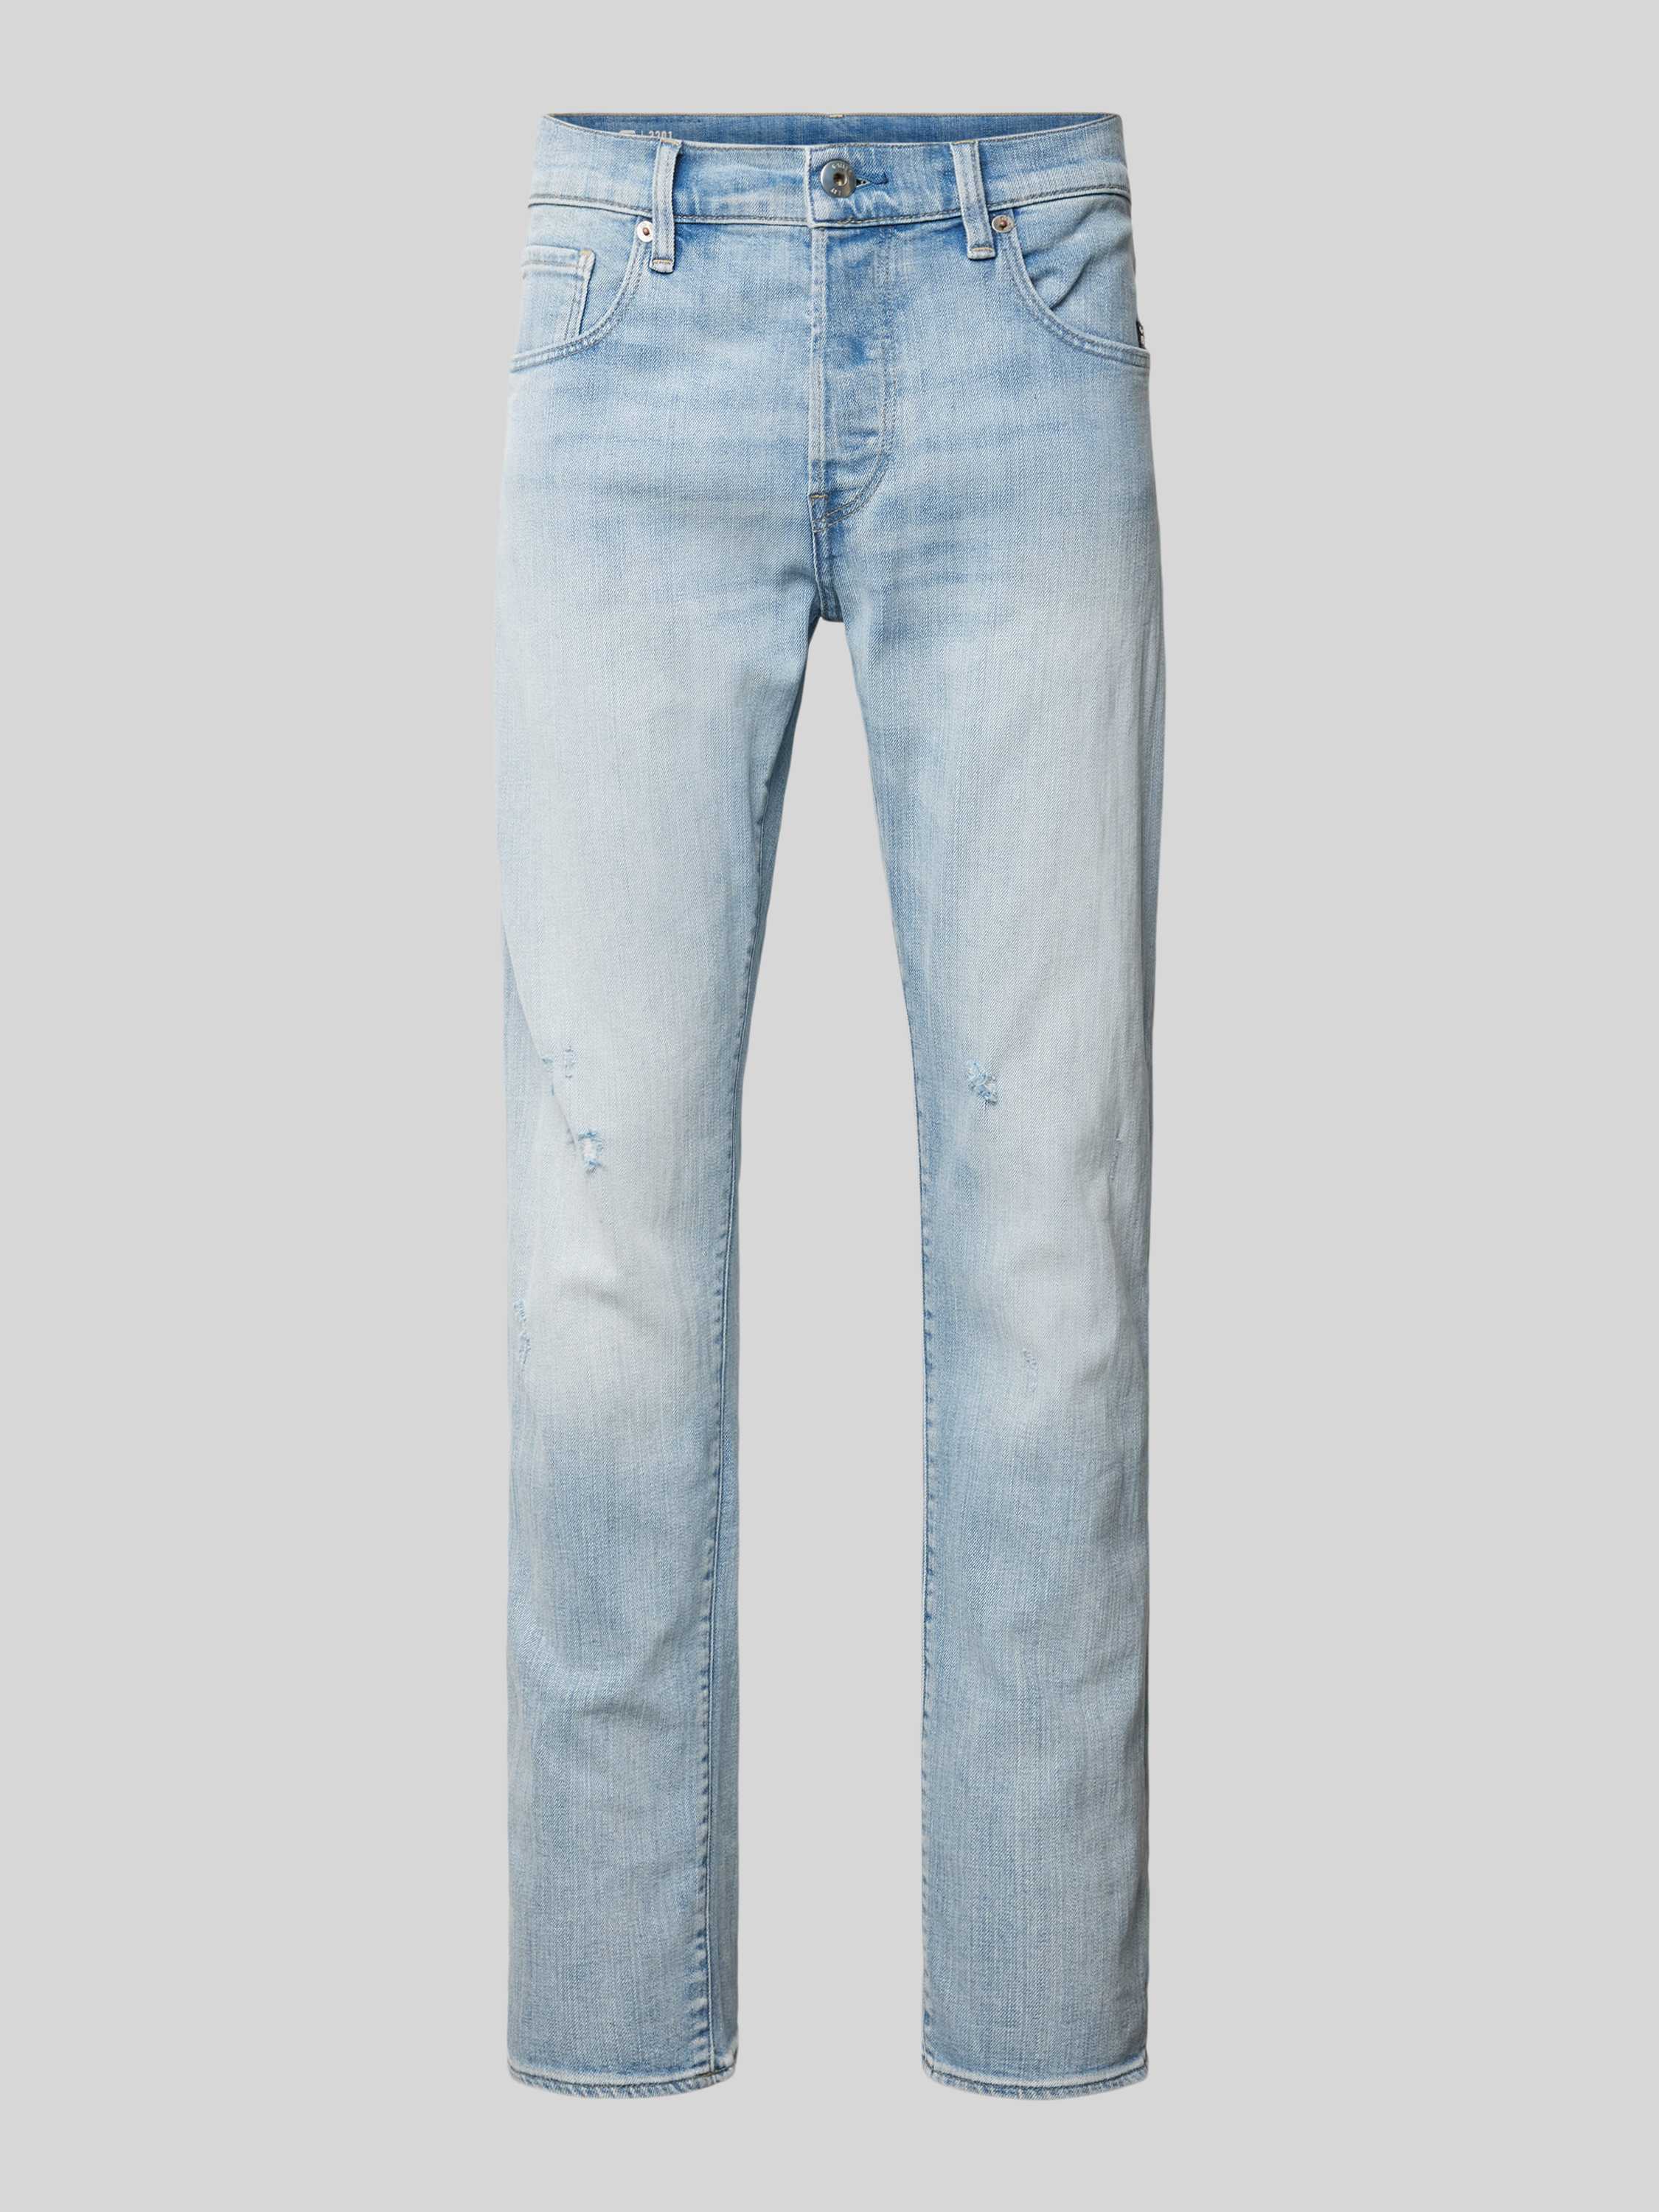 G-Star RAW 3301 slim fit jeans sun faded mirage blue